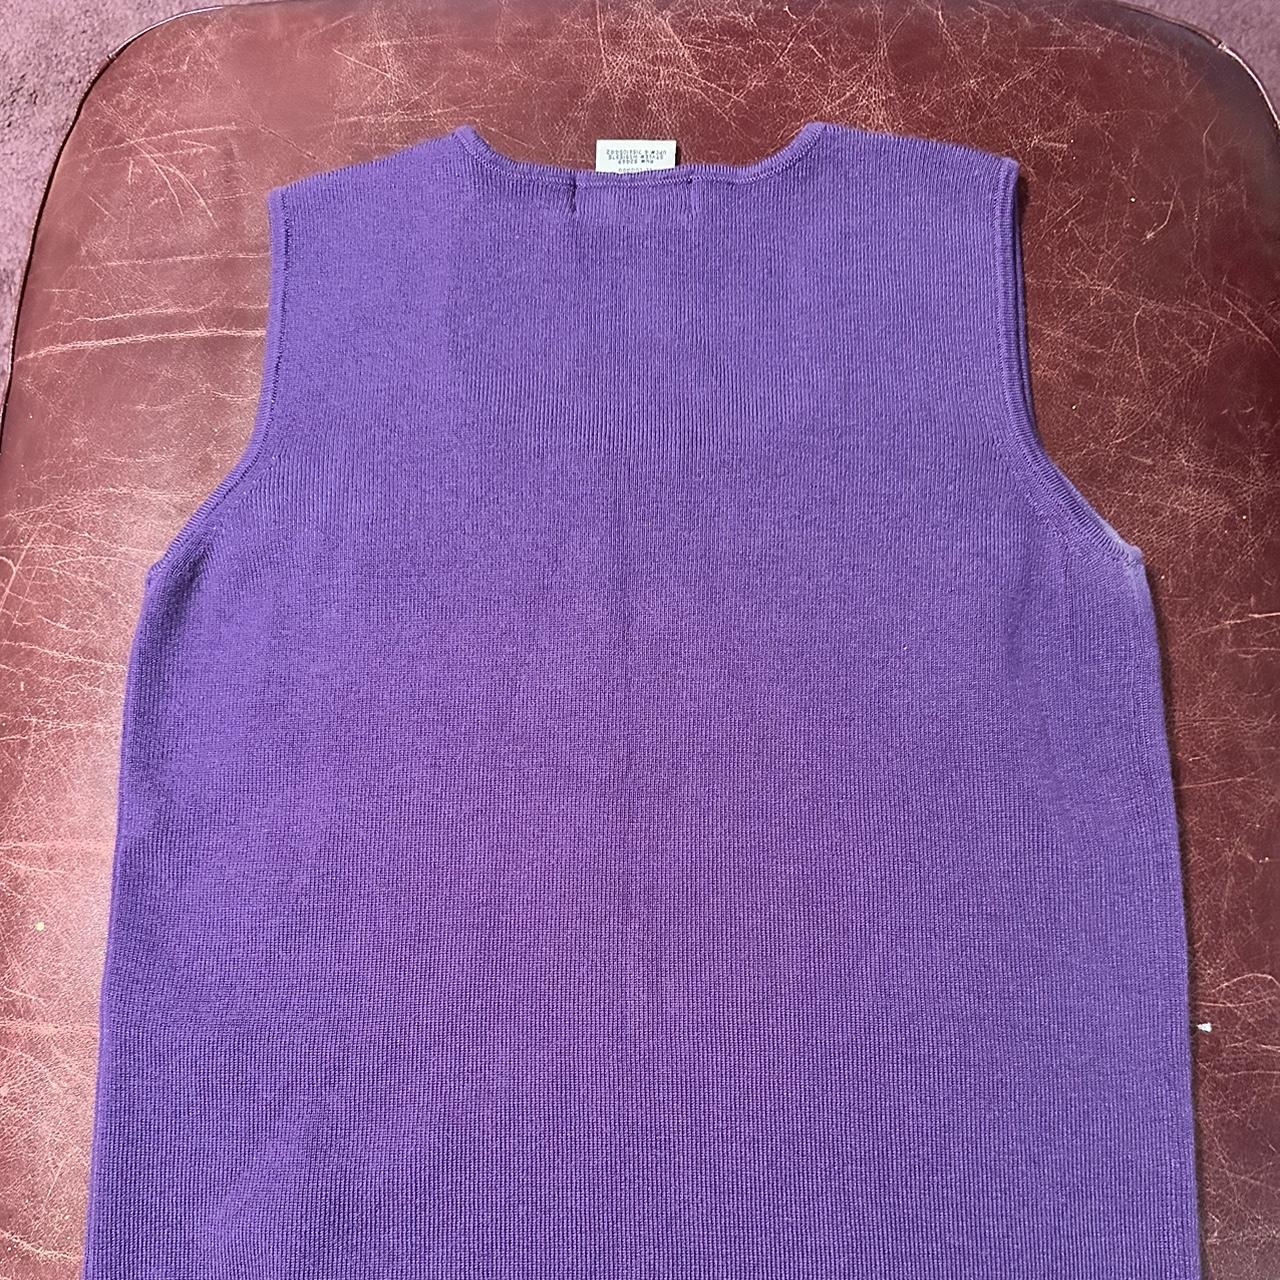 White Stag Women's Purple Vest (2)